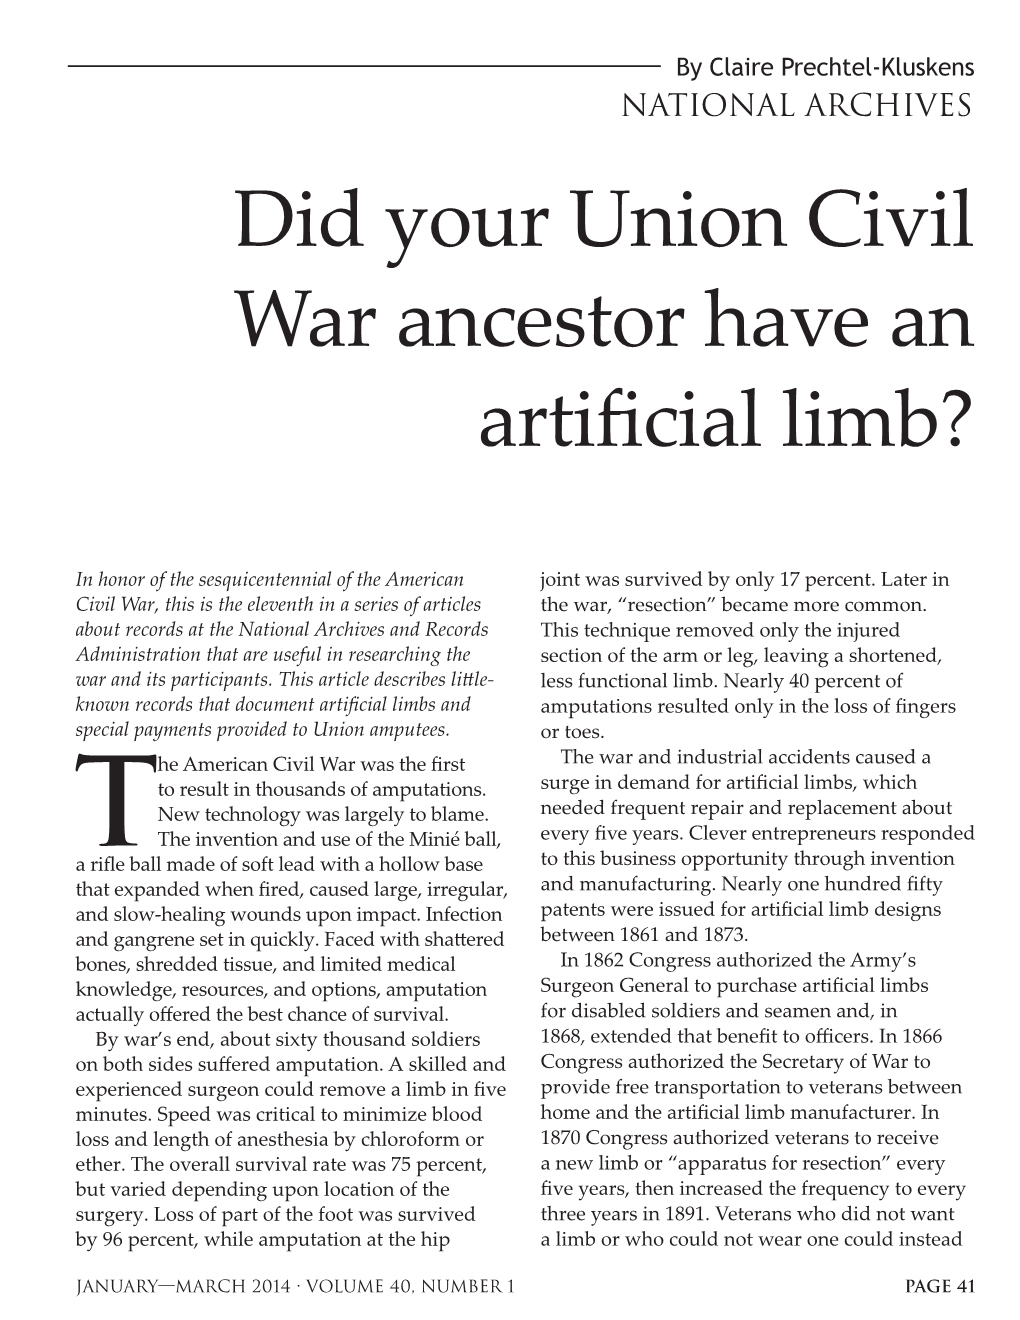 Did Your Union Civil War Ancestor Have an Artificial Limb?